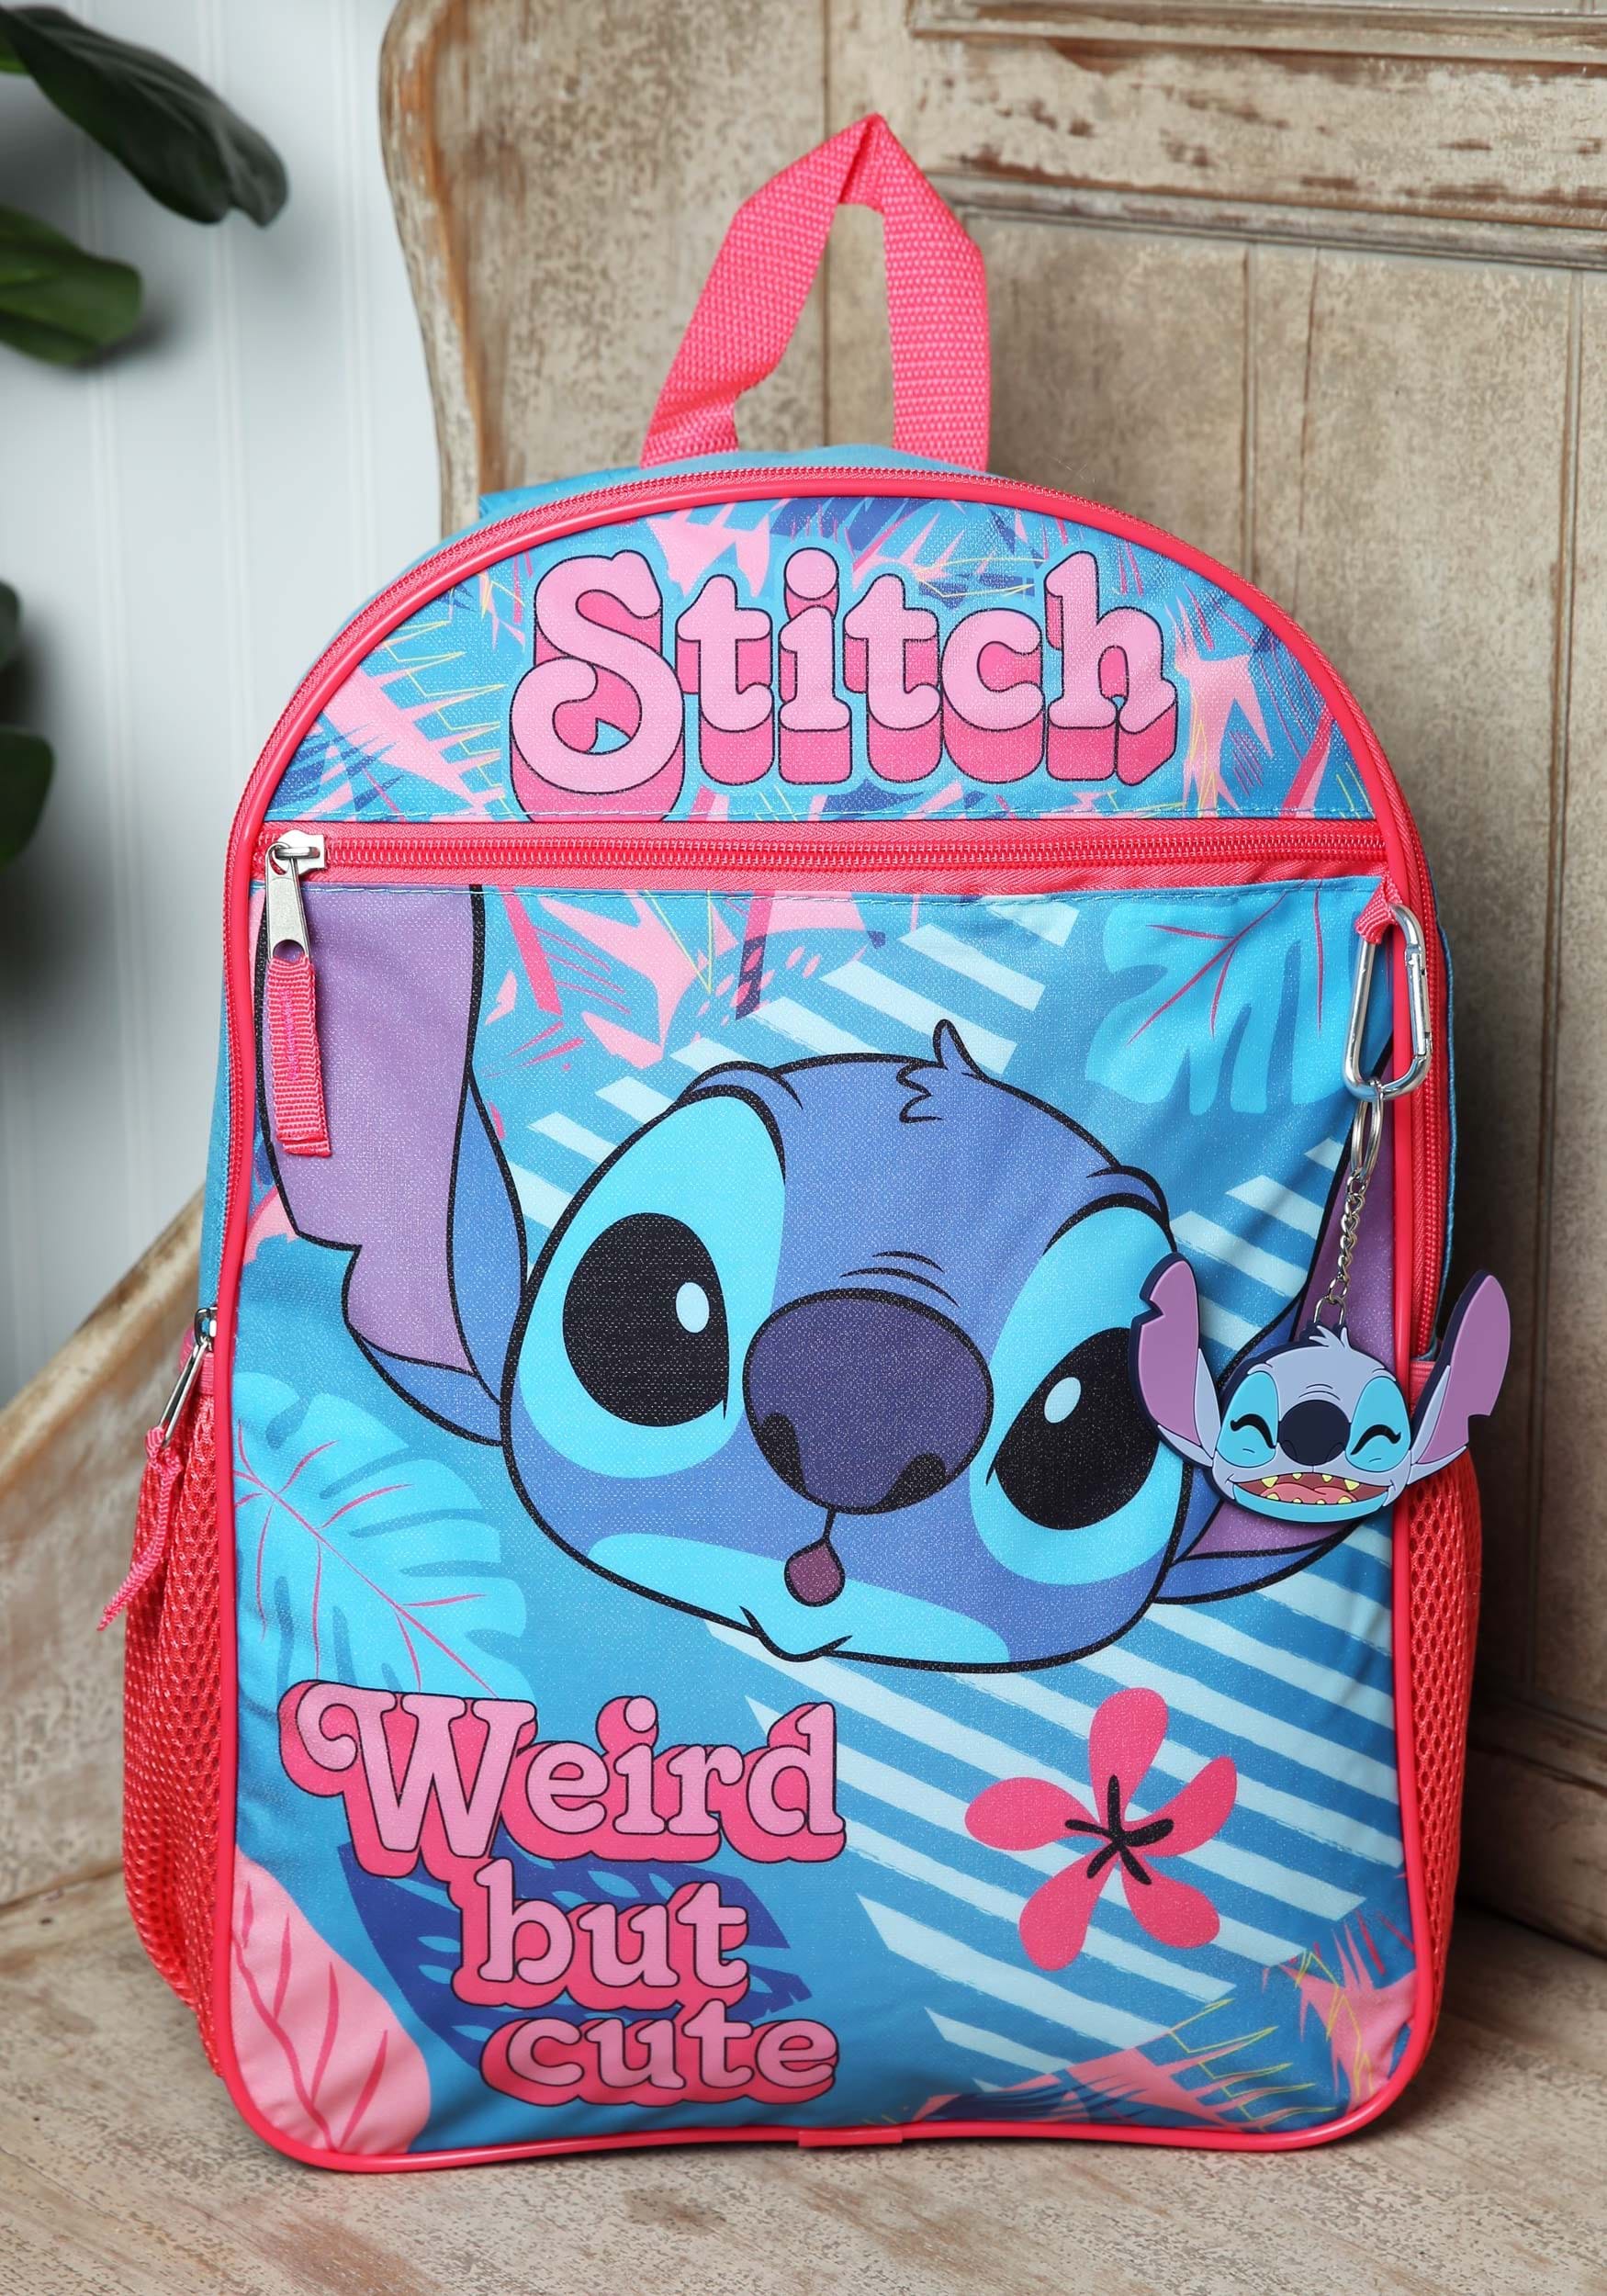 Preorder: Stitch Backpack Stitch School Bag Children's Backpack